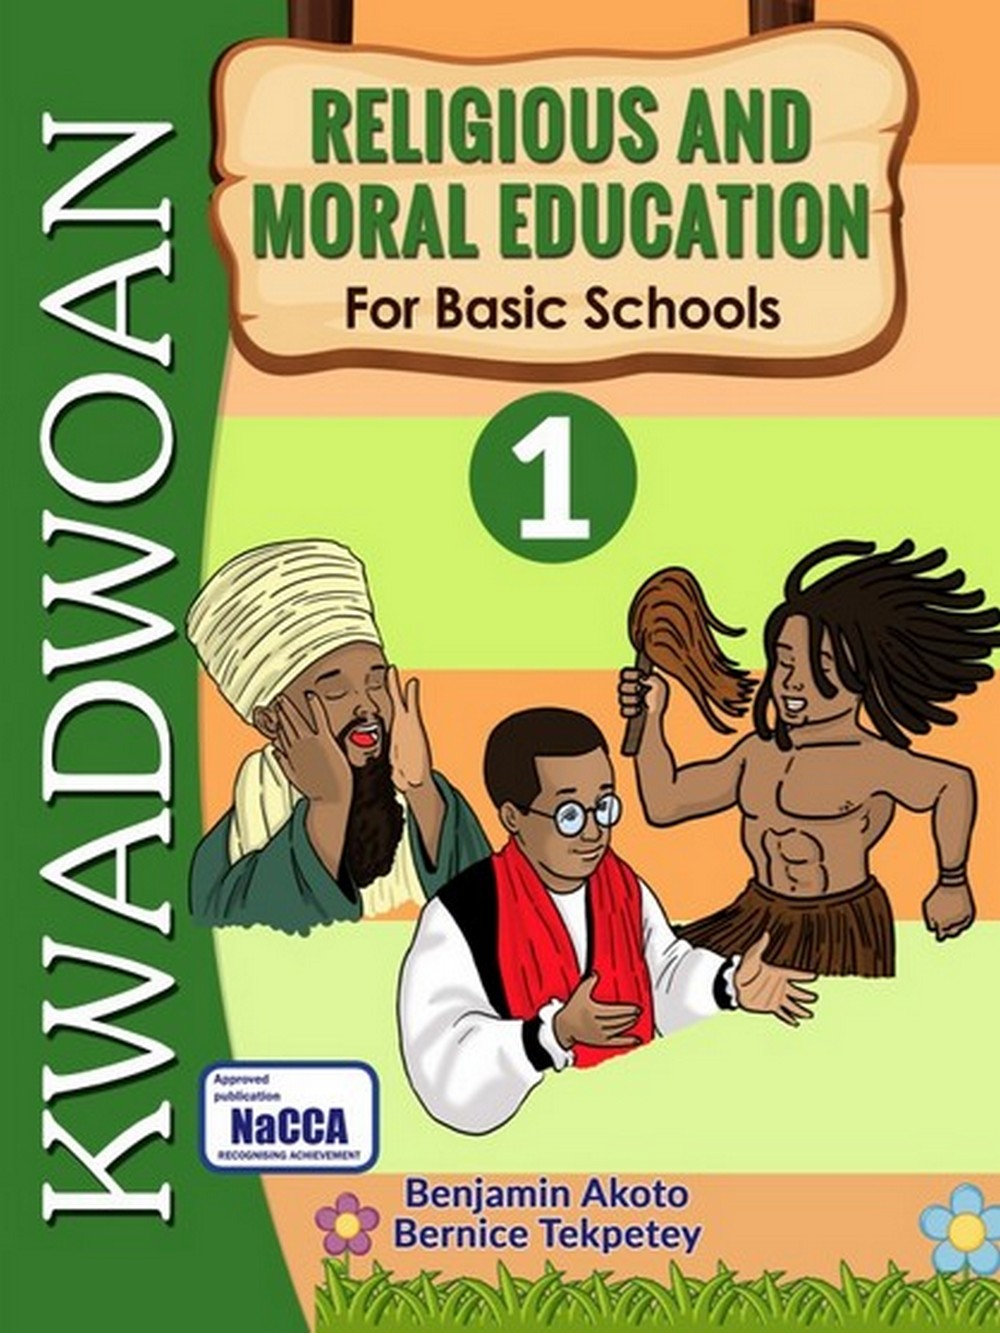 RME FOR BASIC SCHOOLS 1